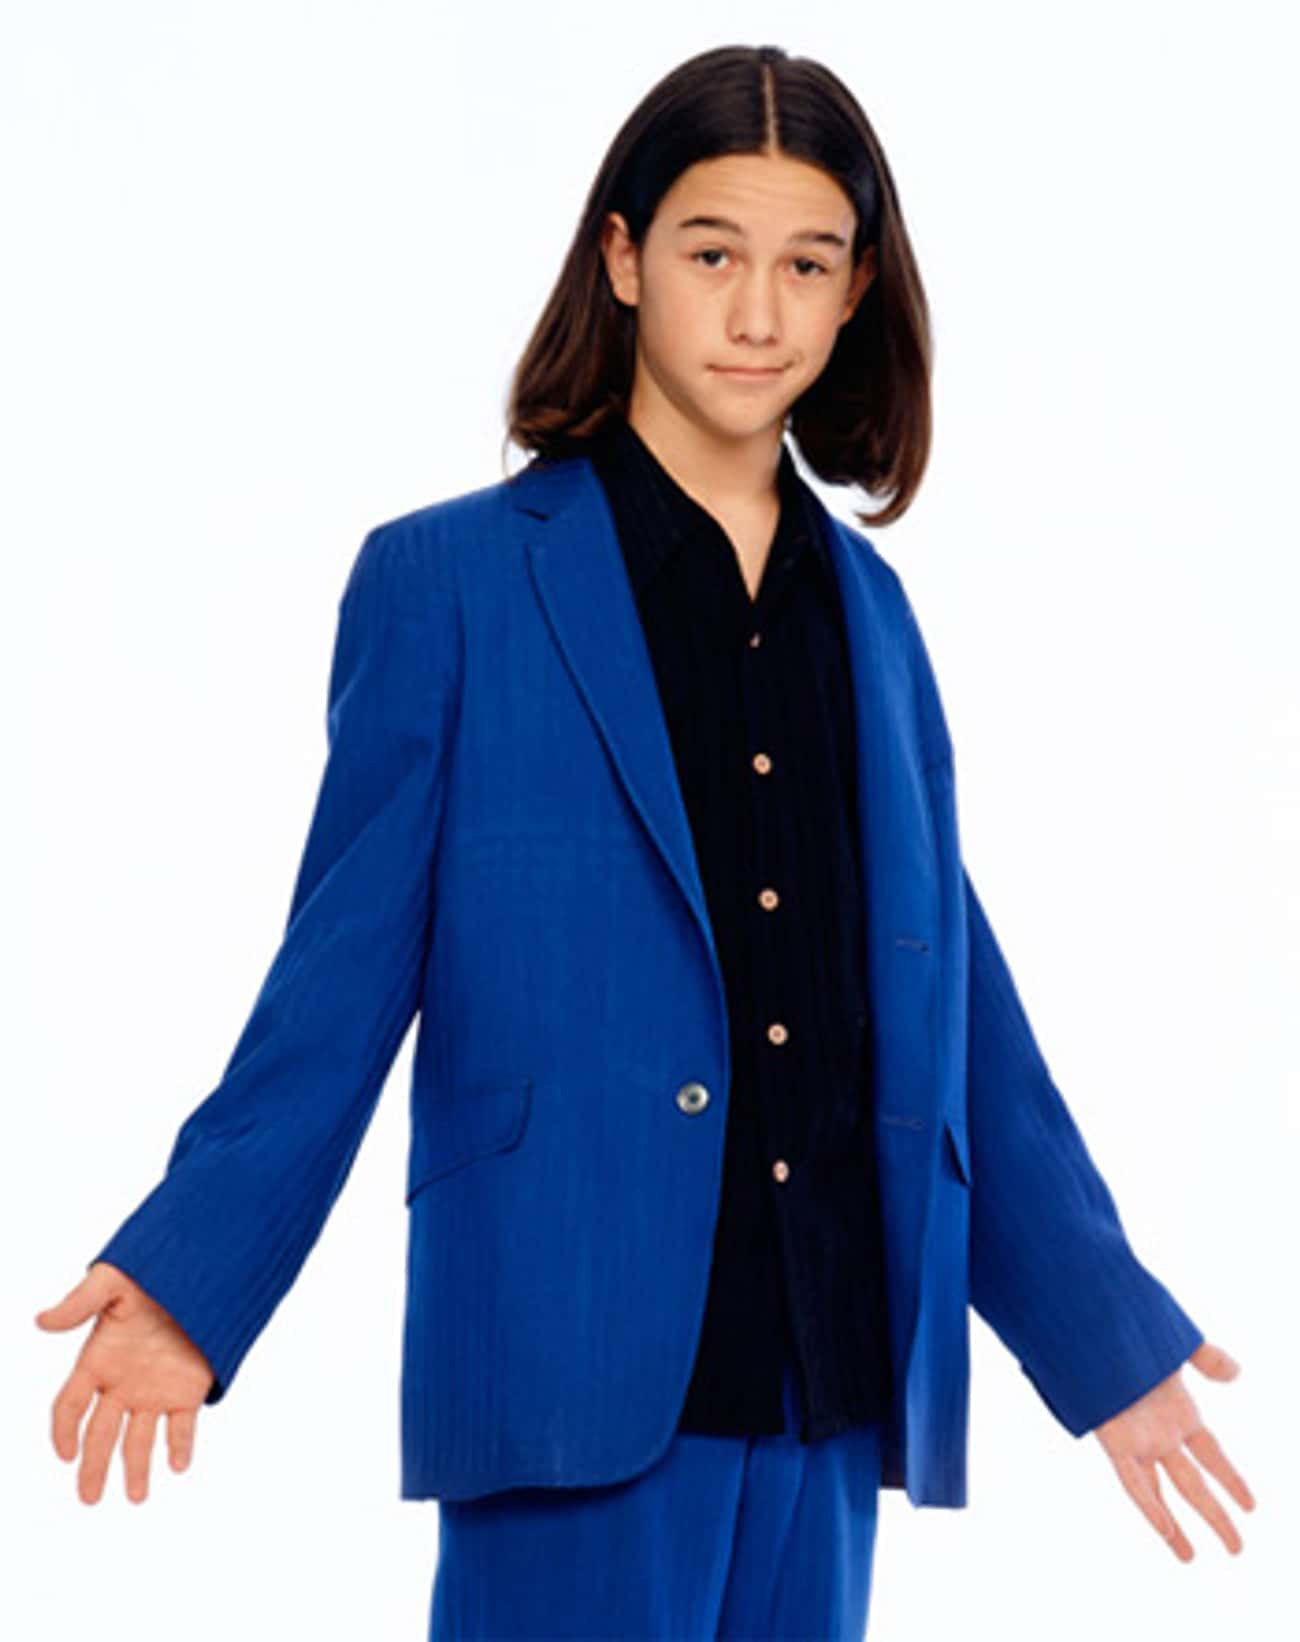 Young Joseph Gordon-Levitt in Bright Blue Suit and Black Buttondown